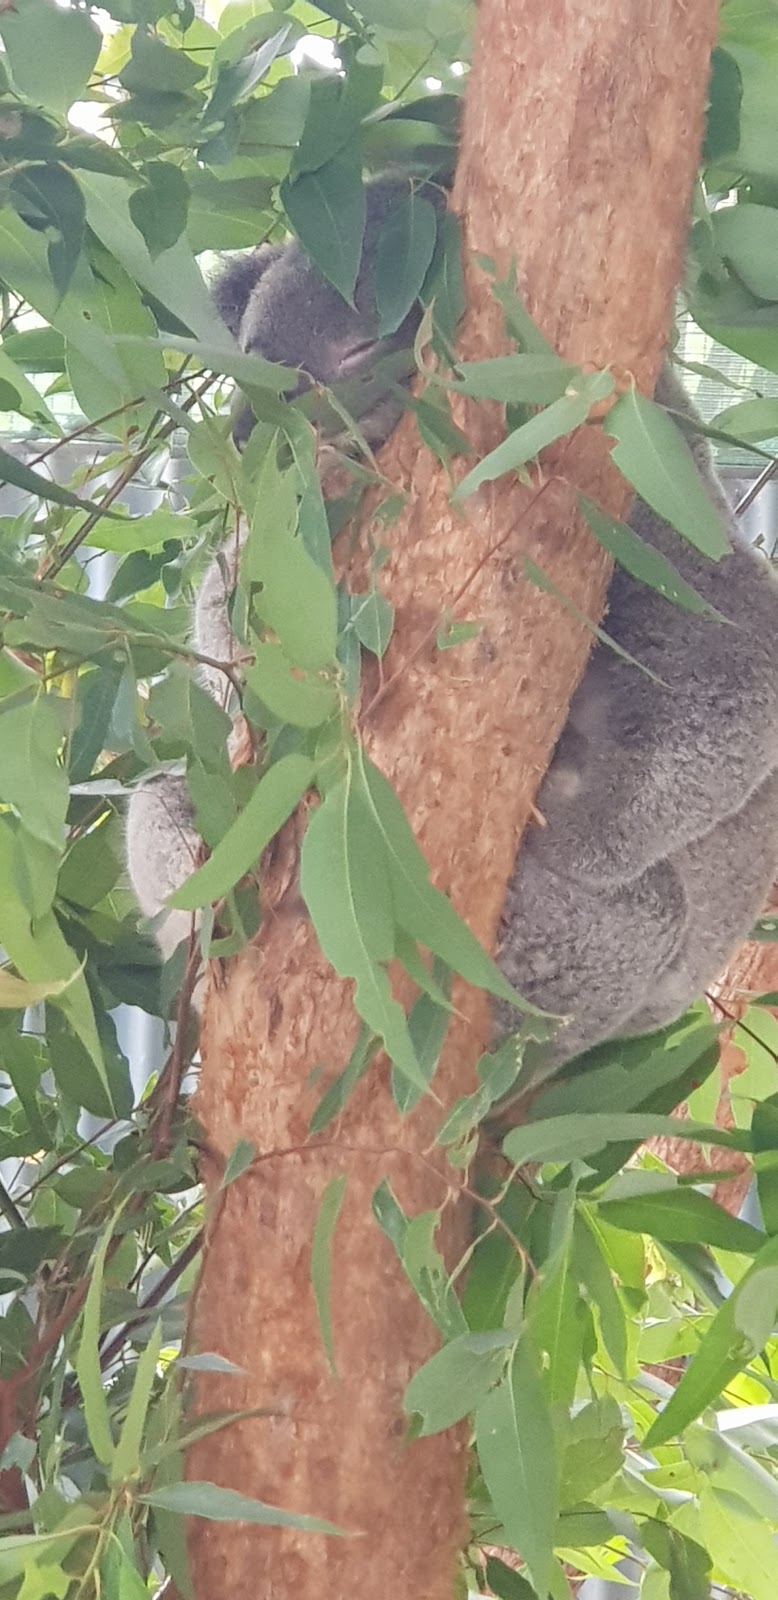 Jean Shaw Koala Reserve | park | Myall St, Hawks Nest NSW 2324, Australia | 0249970878 OR +61 2 4997 0878